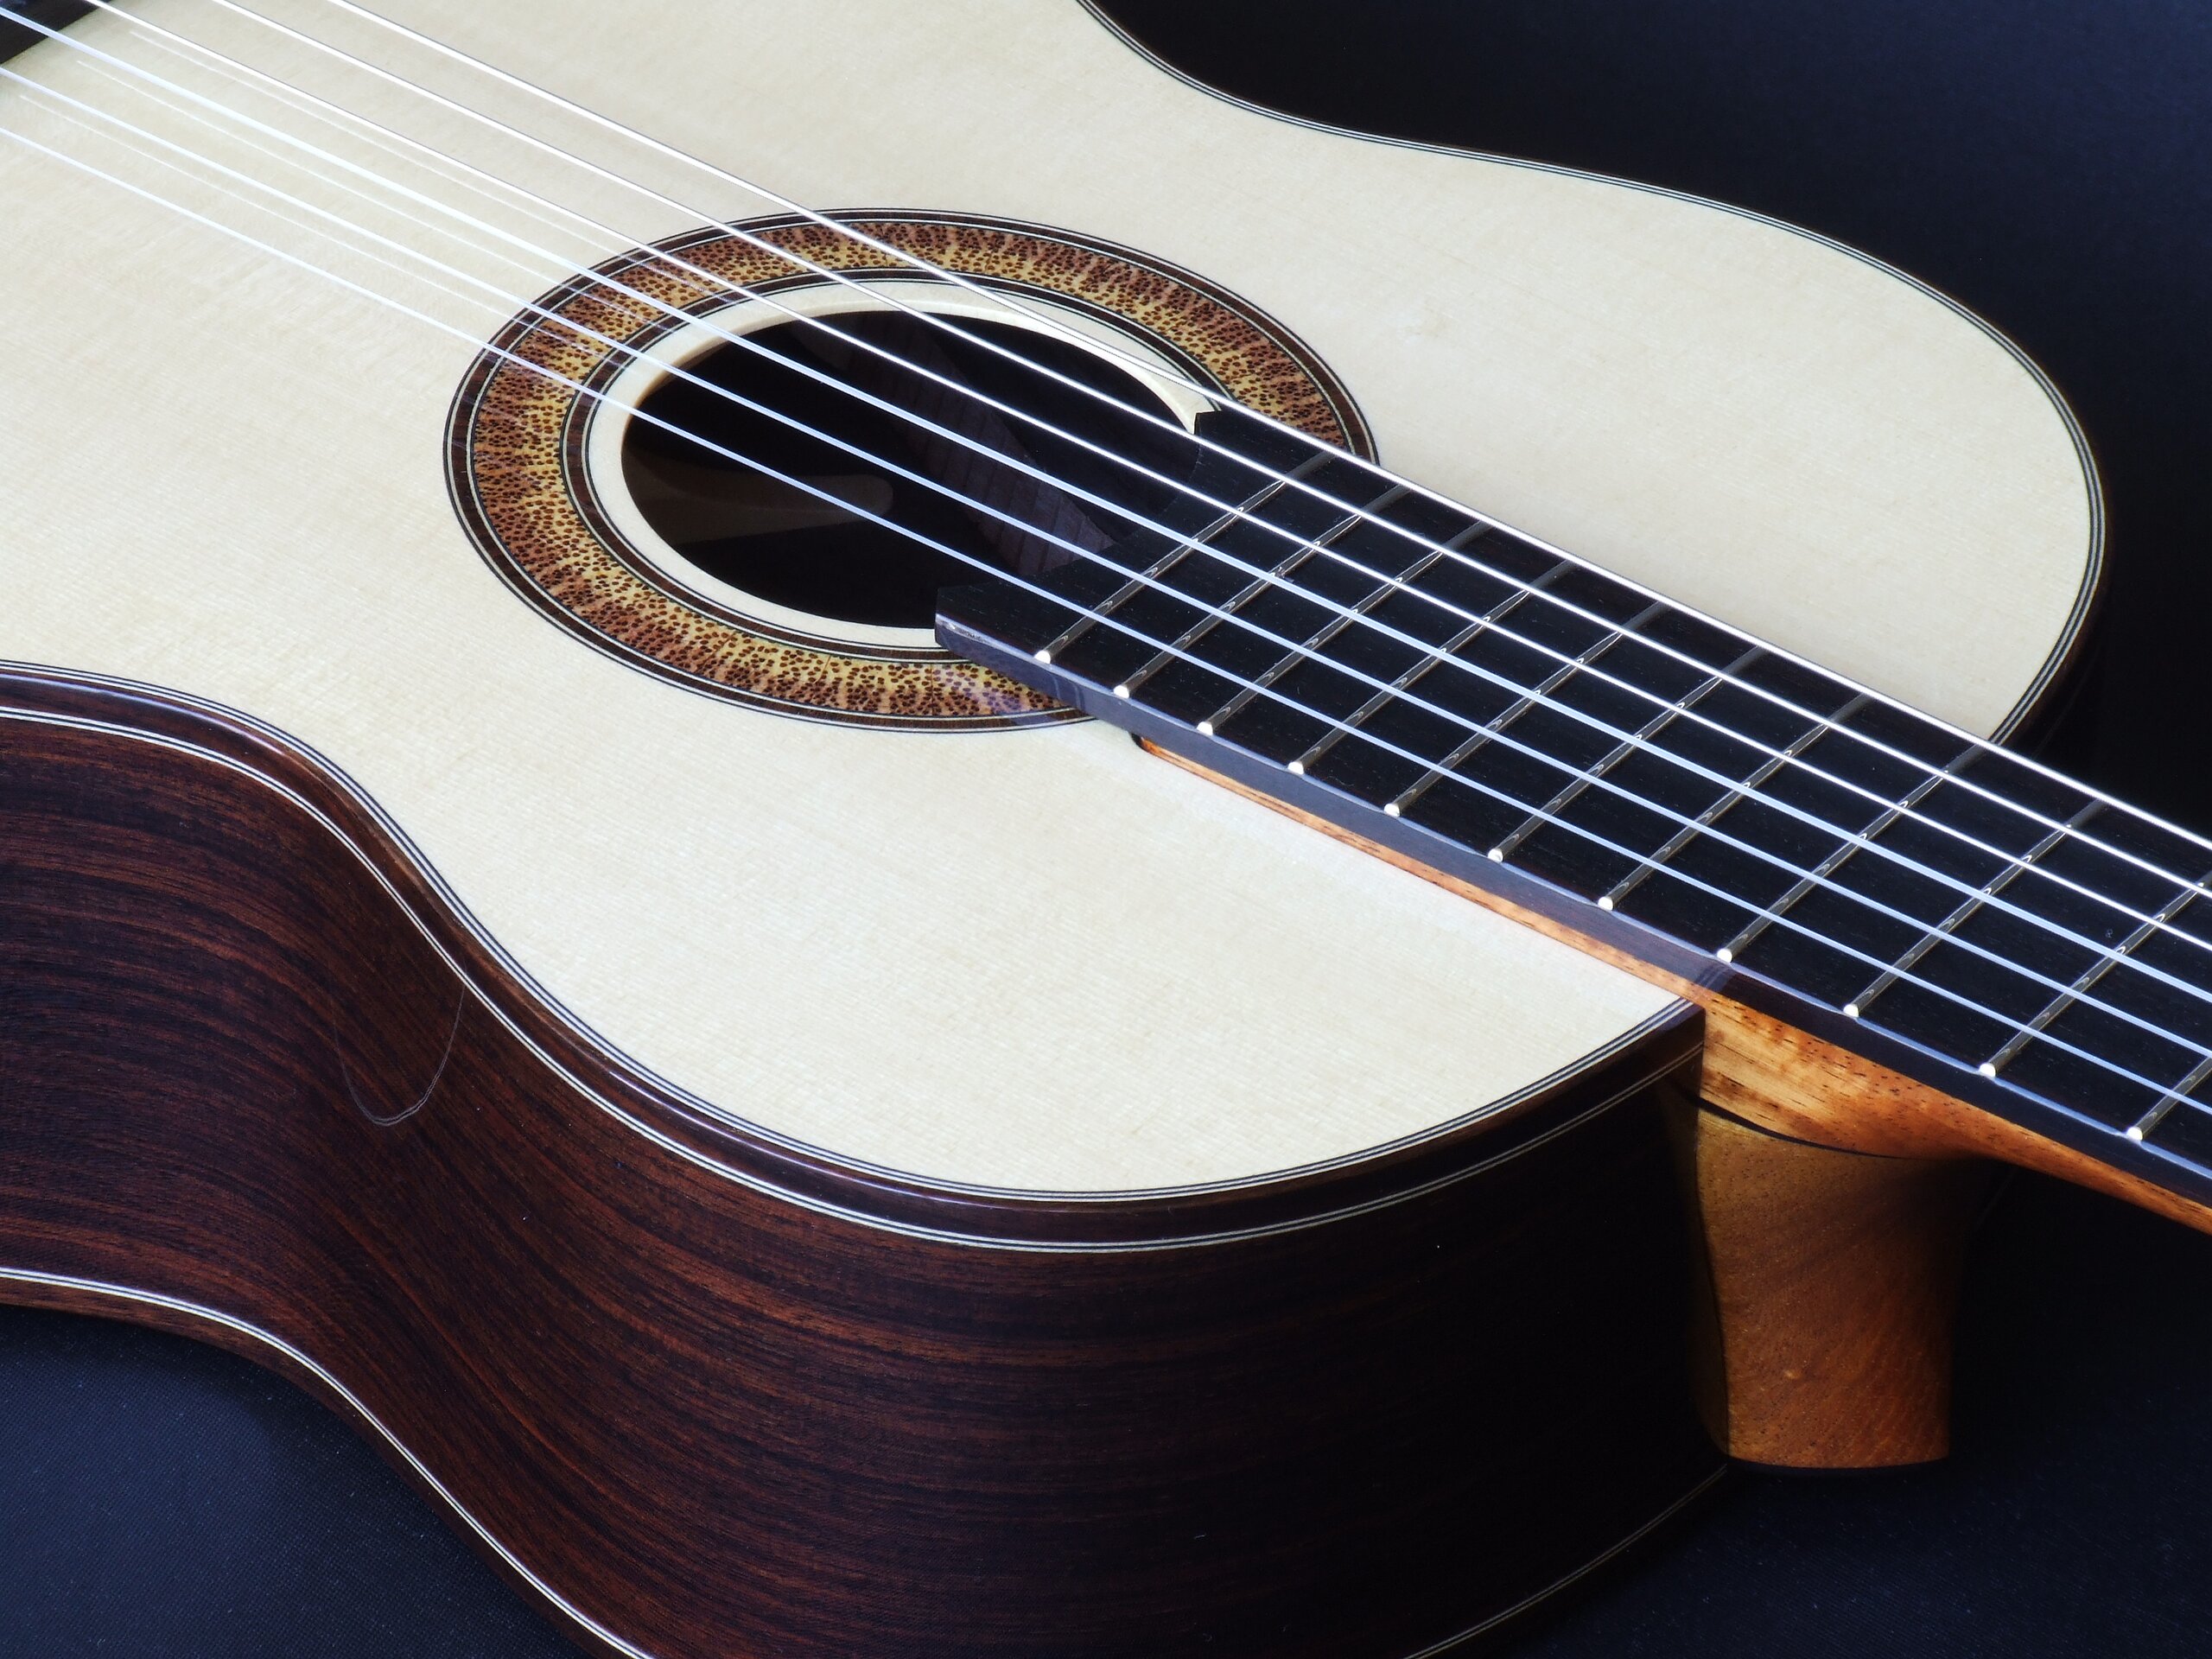 atural sunburst rosette and ebony fretboard on a classical guitar